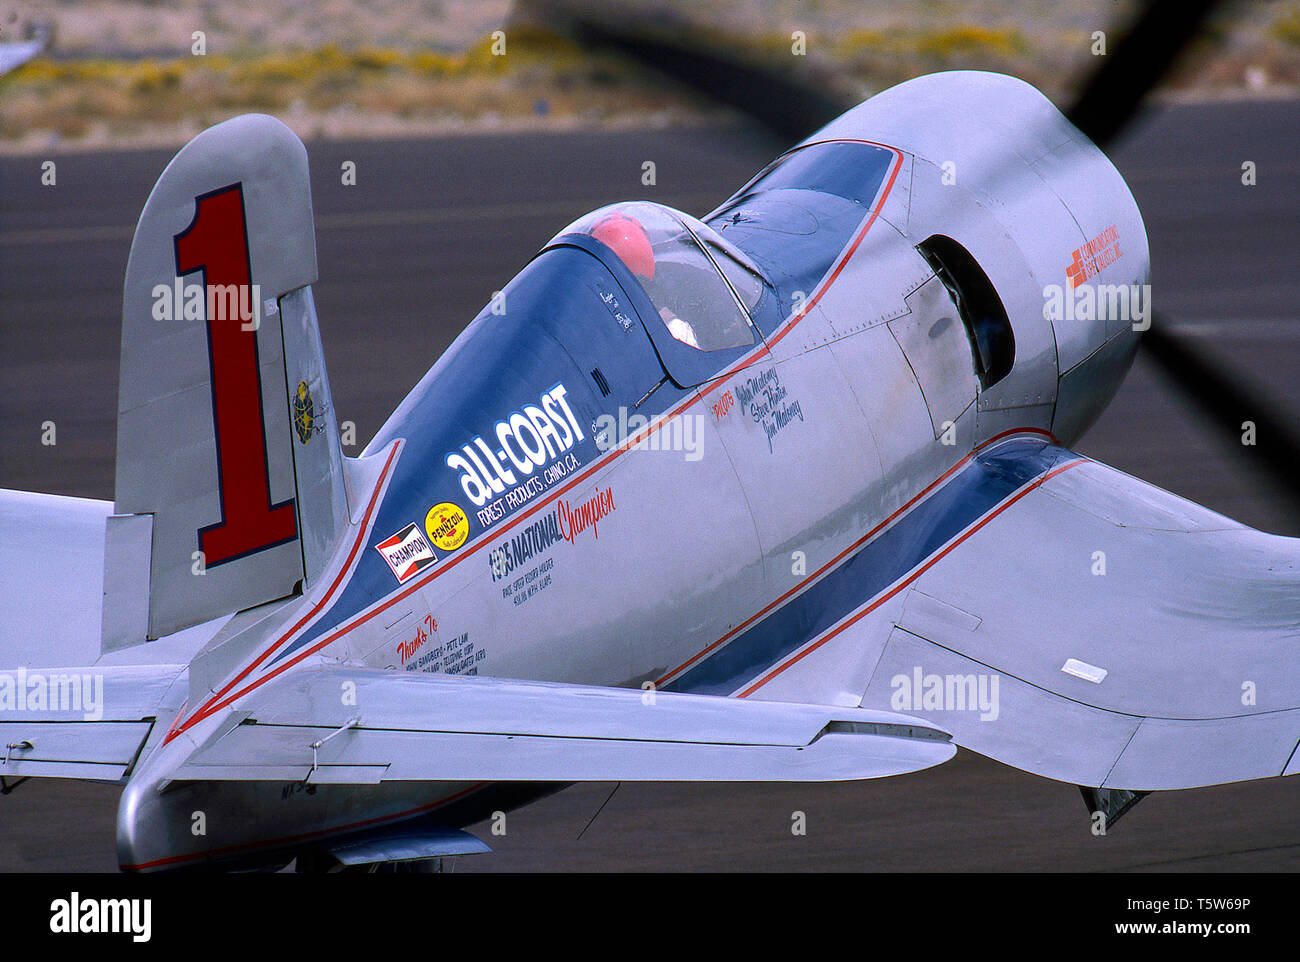 Vought Corsair Air Racer Stock Photo